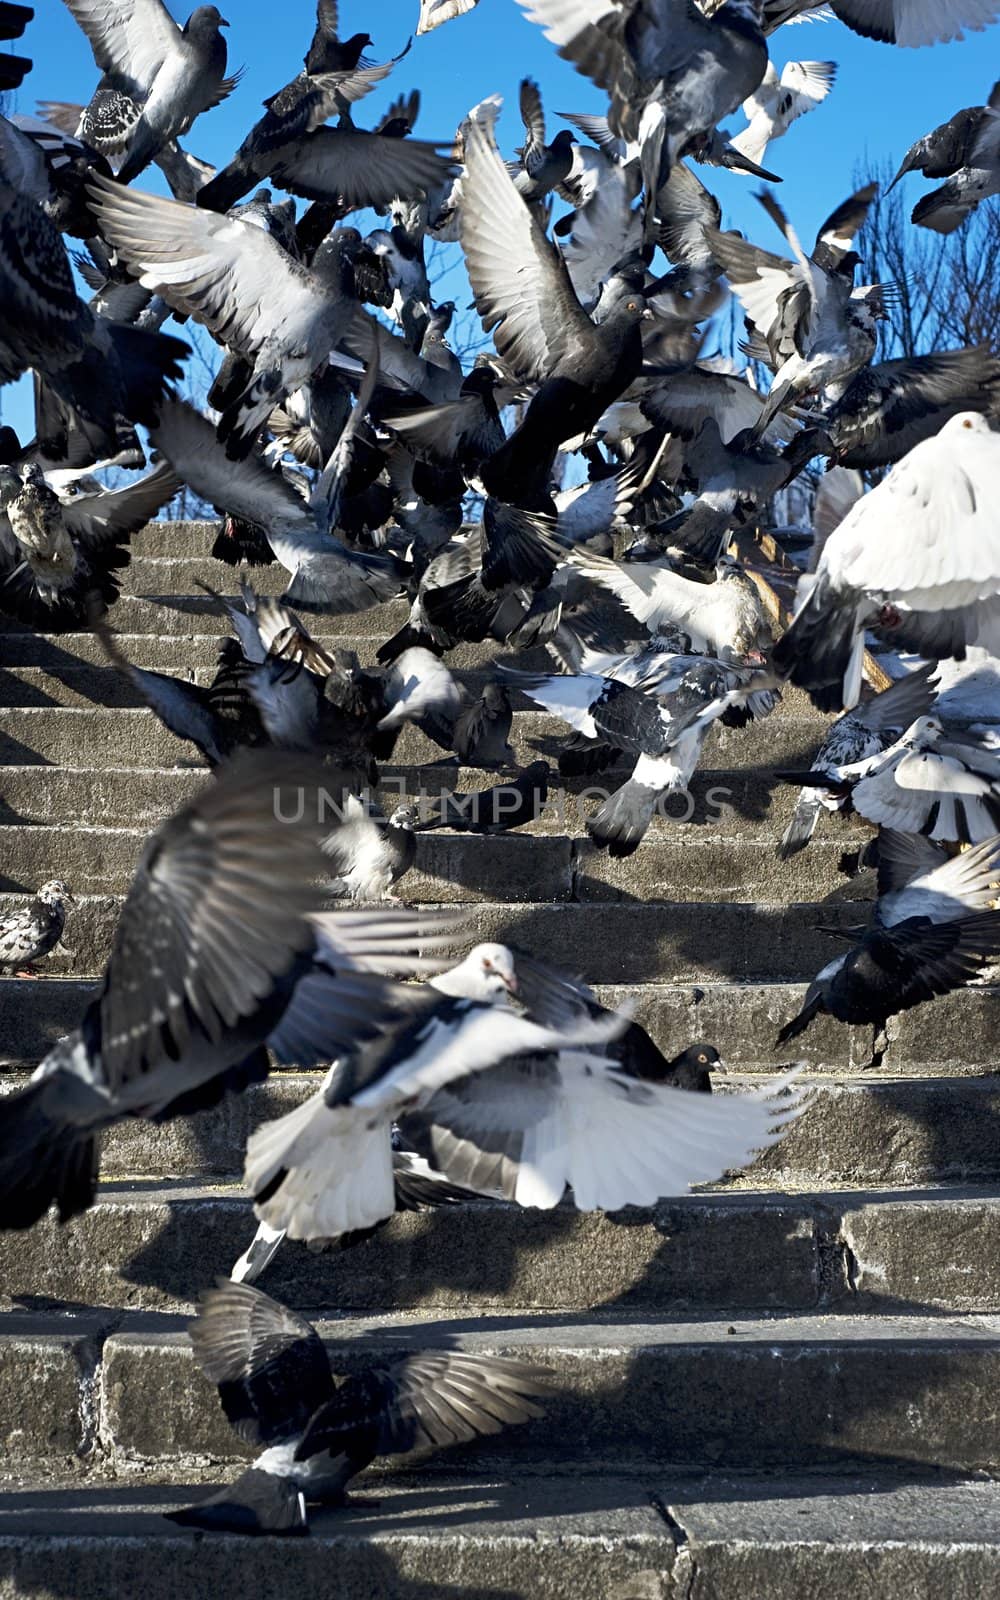  Flock of Pigeons by joyfull